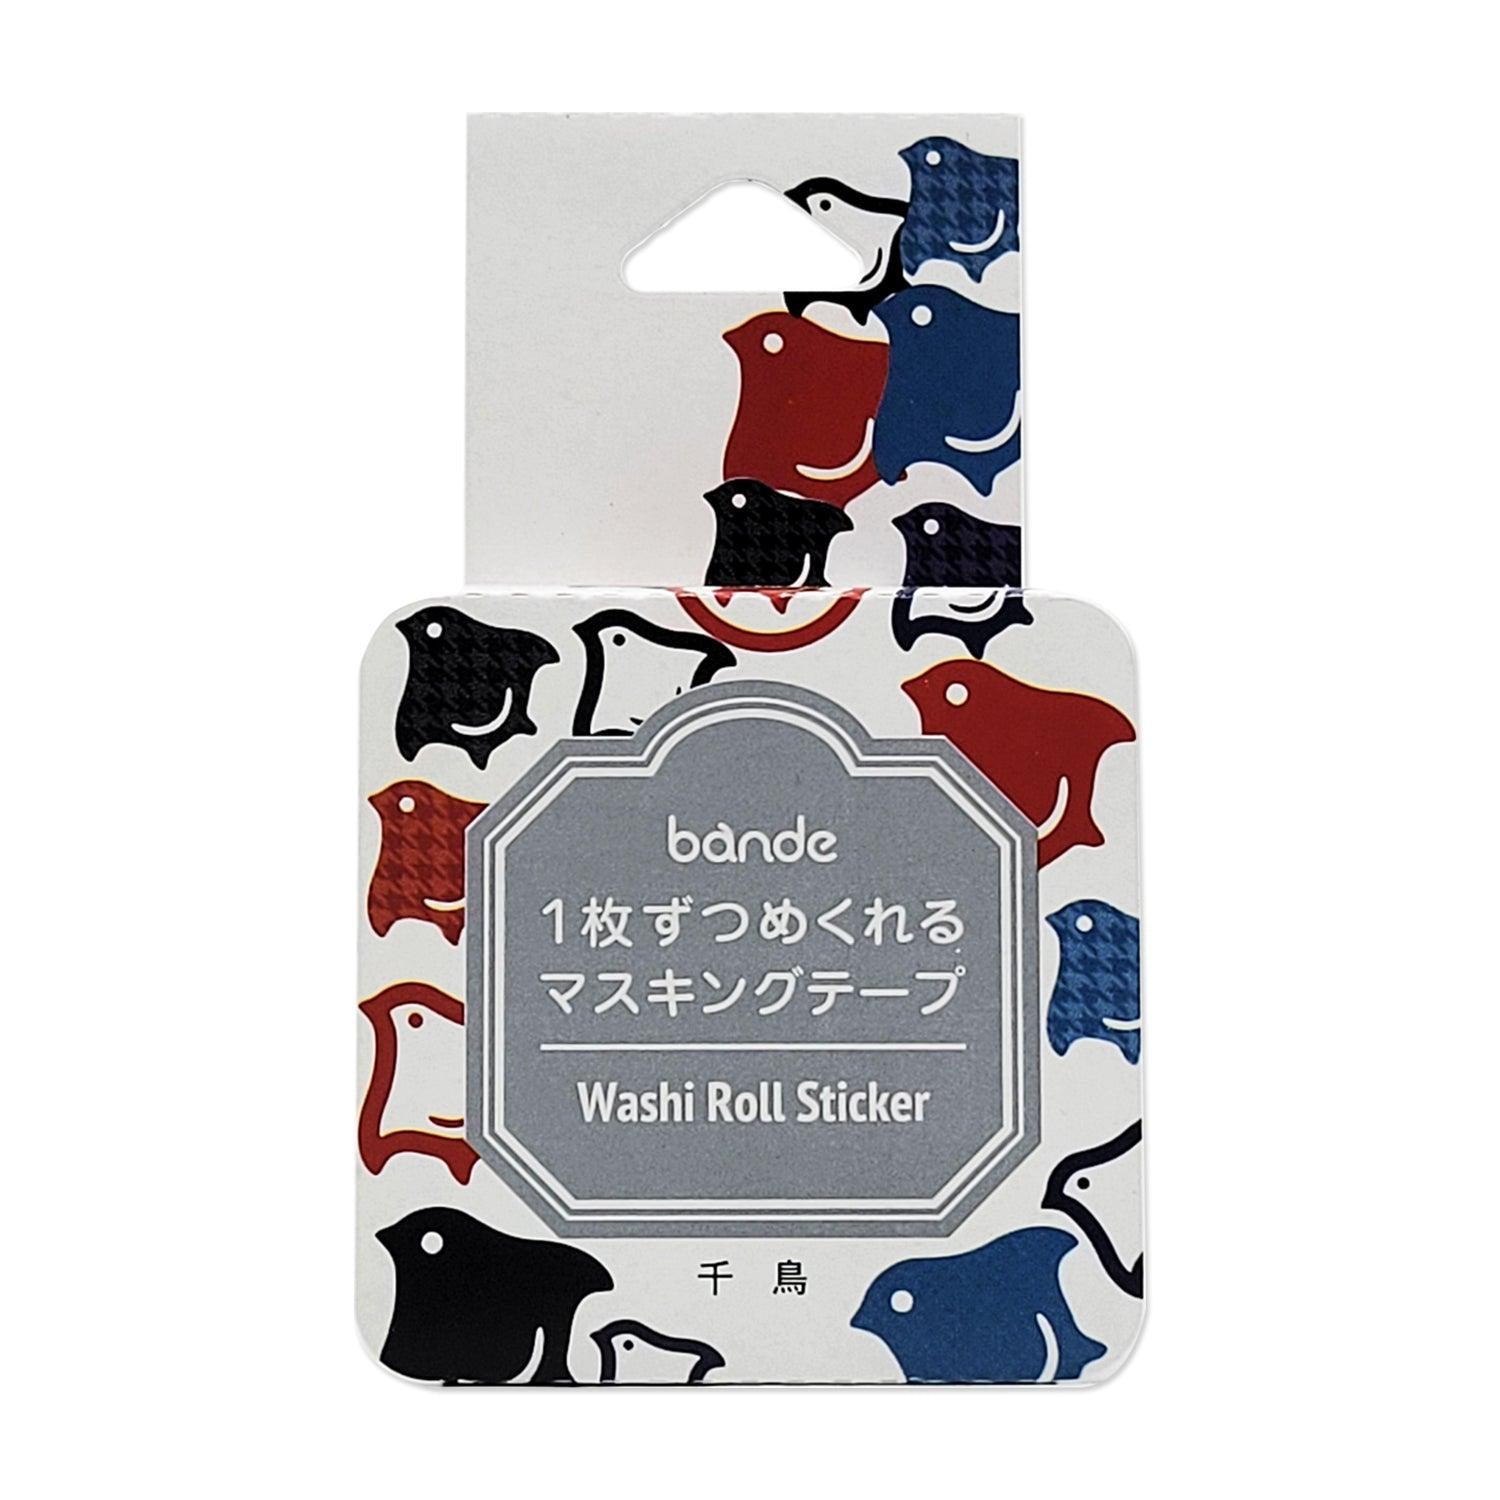 Bande Washi sticker roll Washi Tape - Japanese Chidori Plover Bird | papermindstationery.com | Animal, Bande, Bird, Masking Roll Stickers